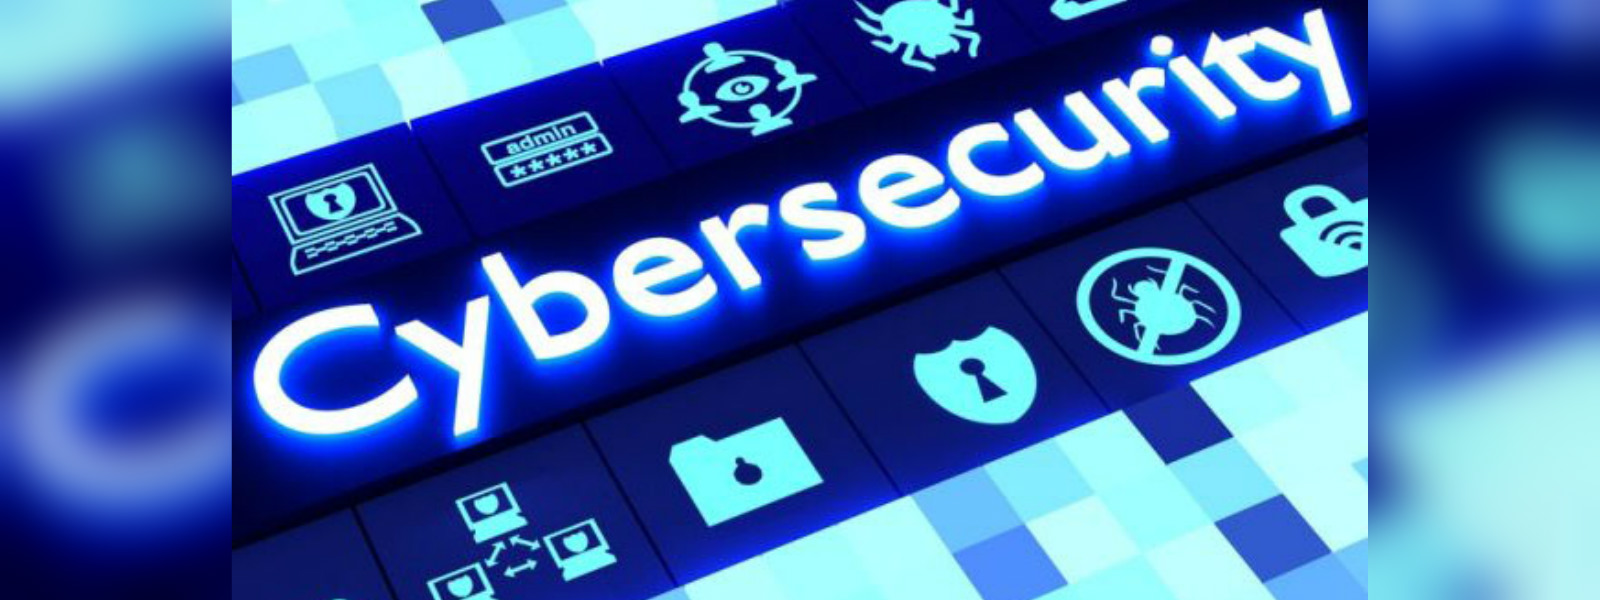 CERT warns against malware being sent via email